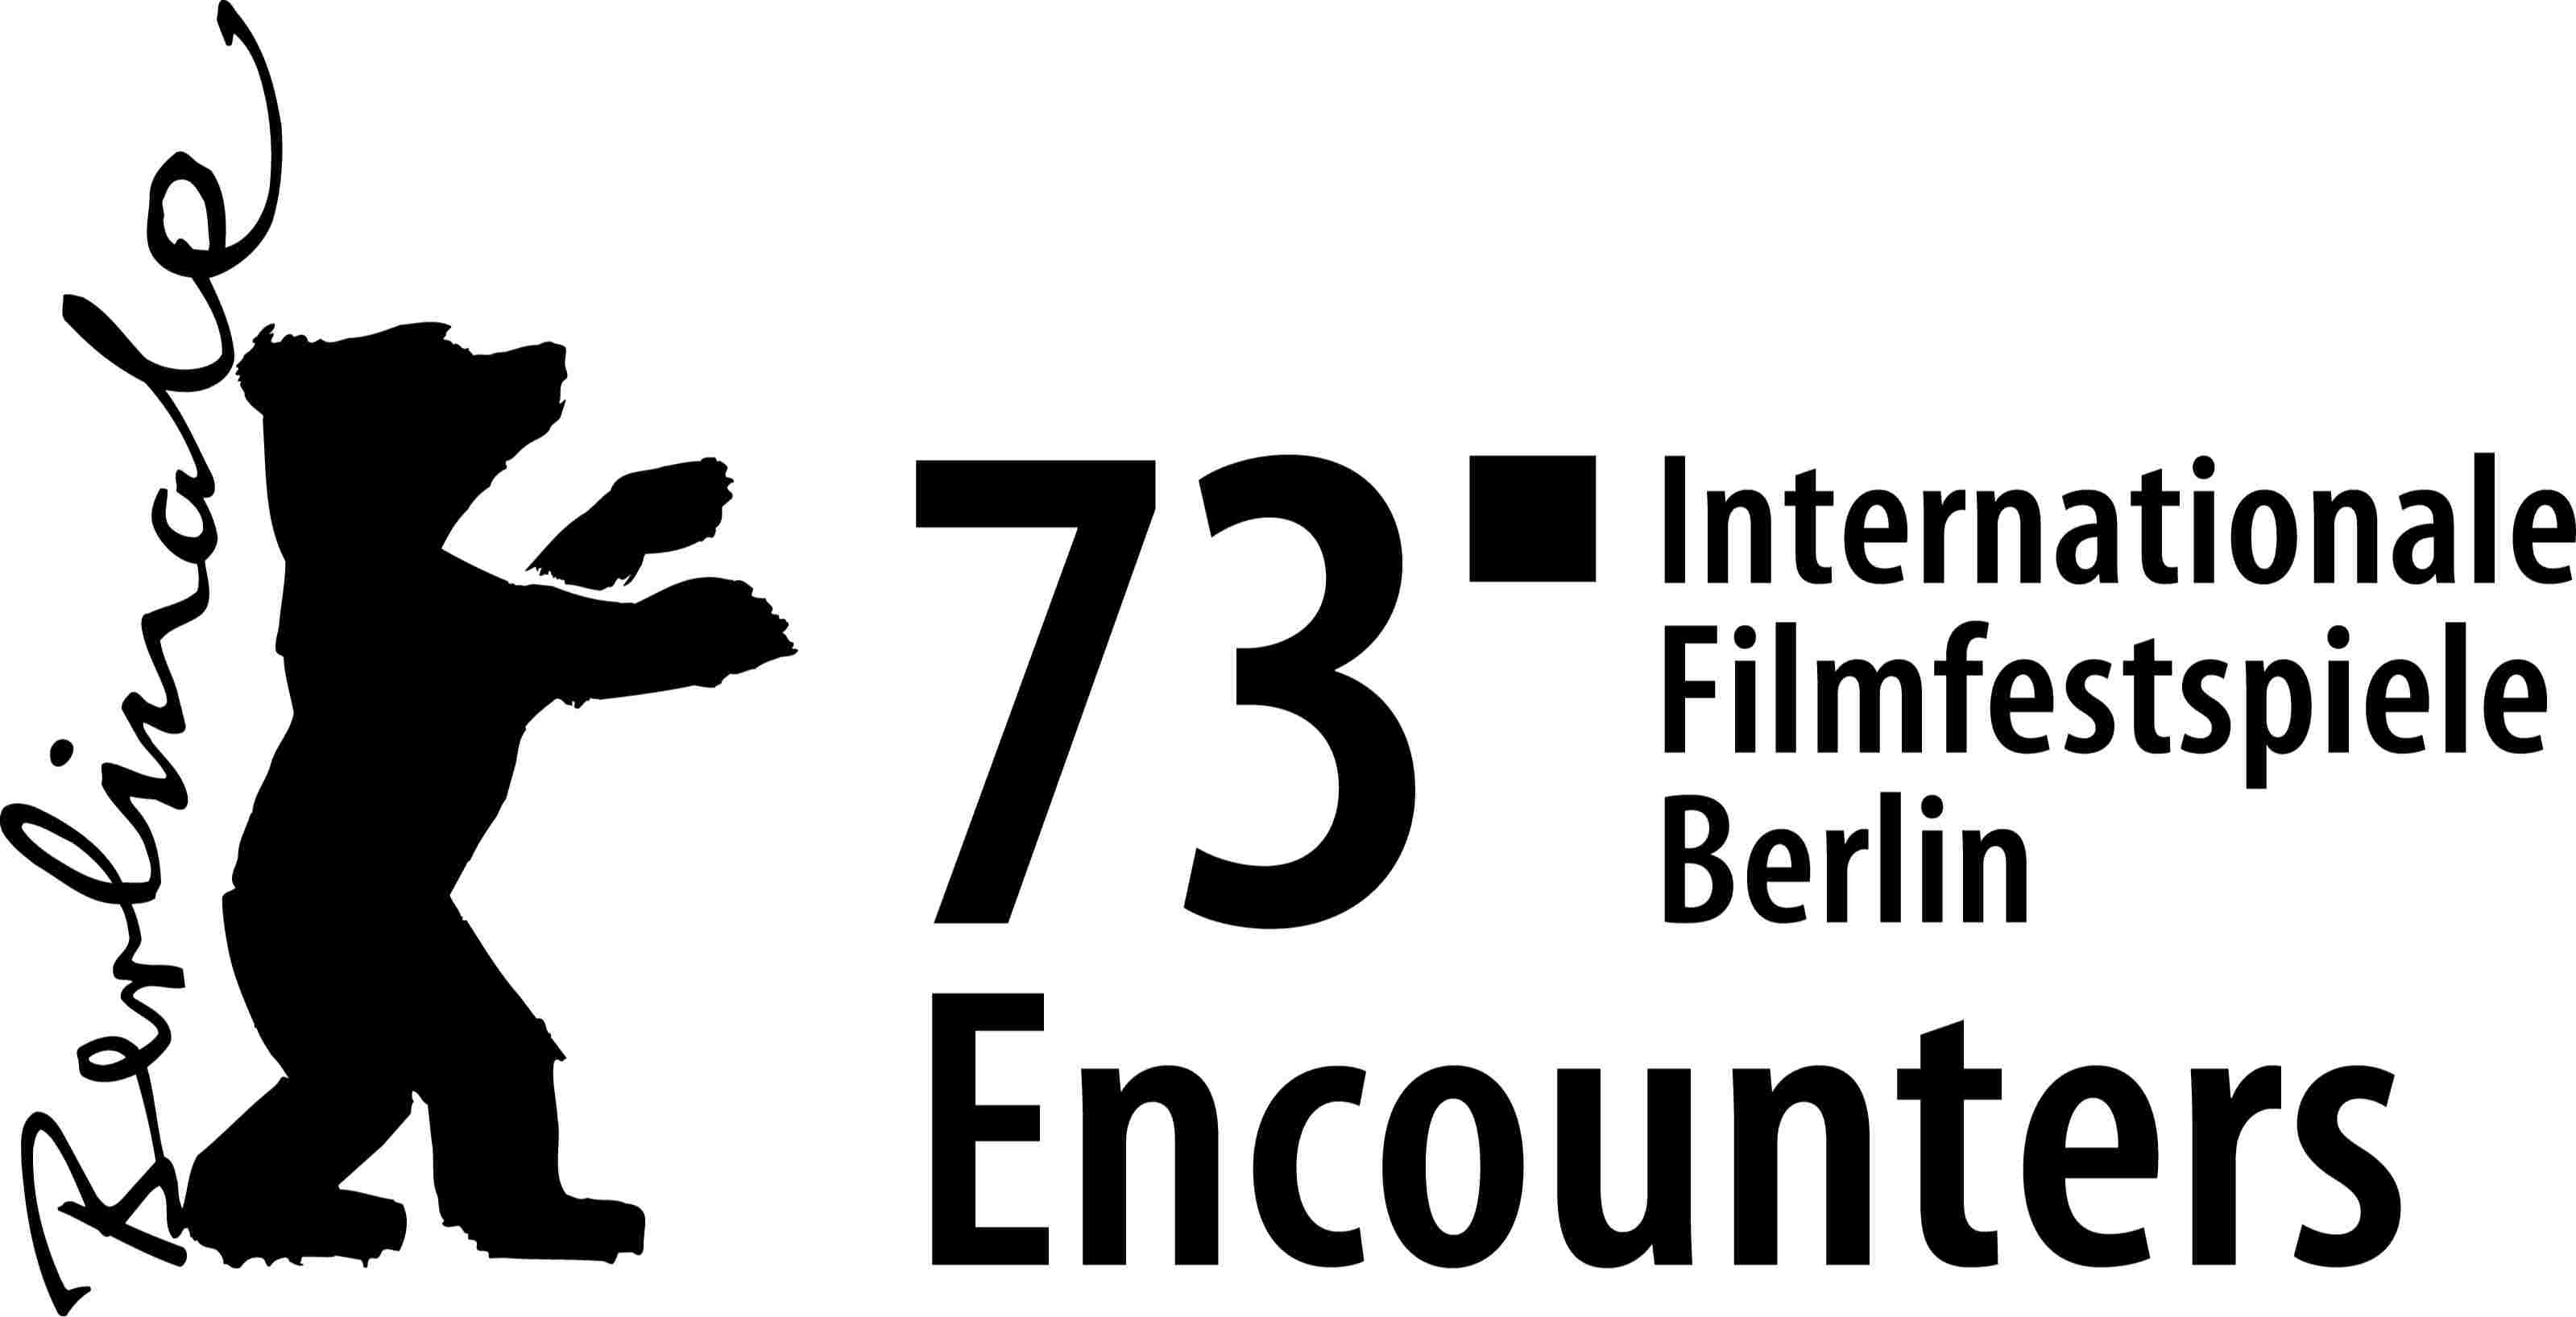 Berlinale 73 – Encounters